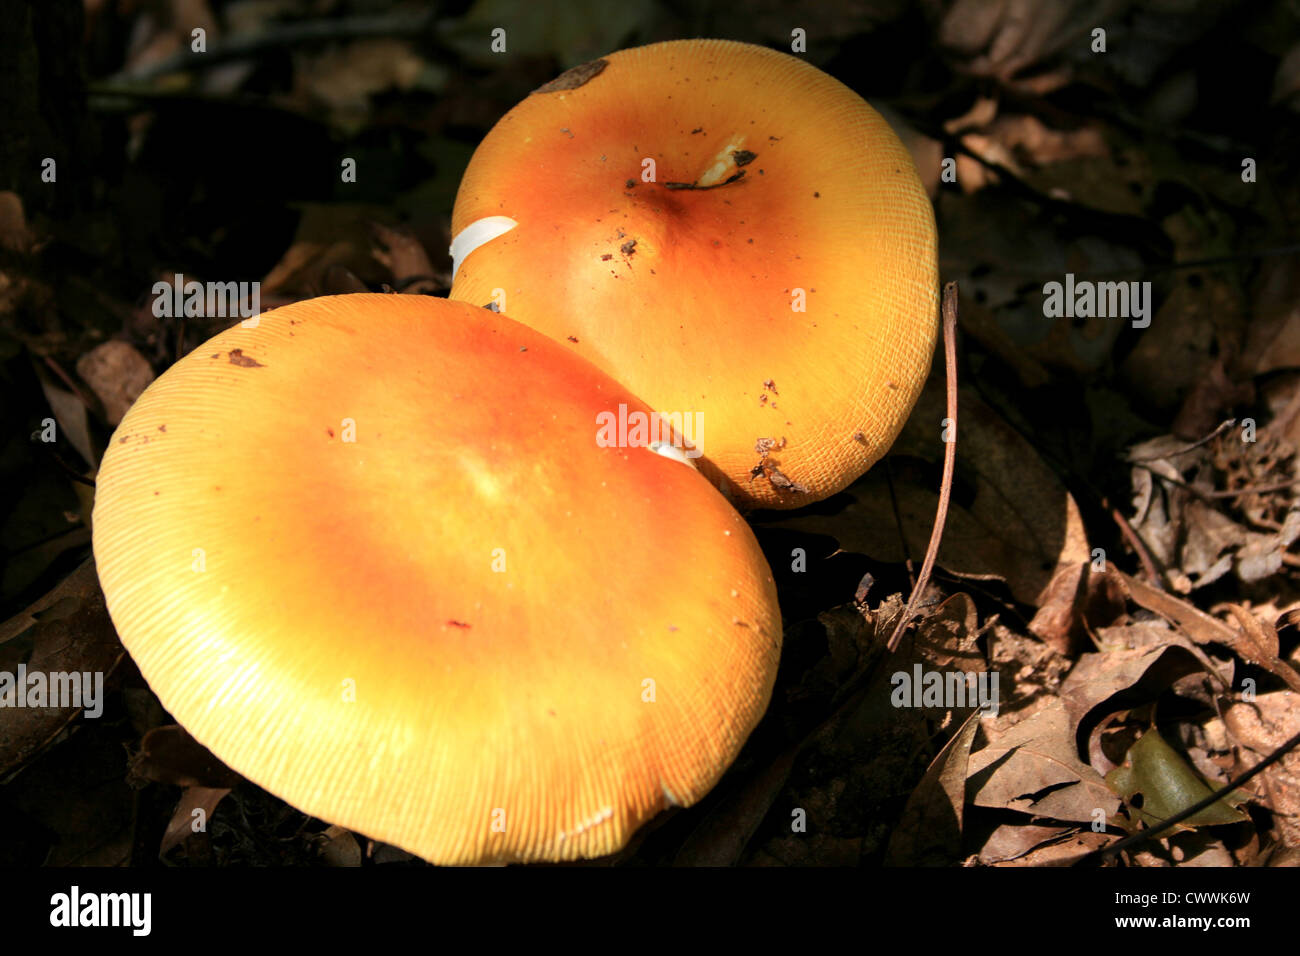 mushroom picture Stock Photo